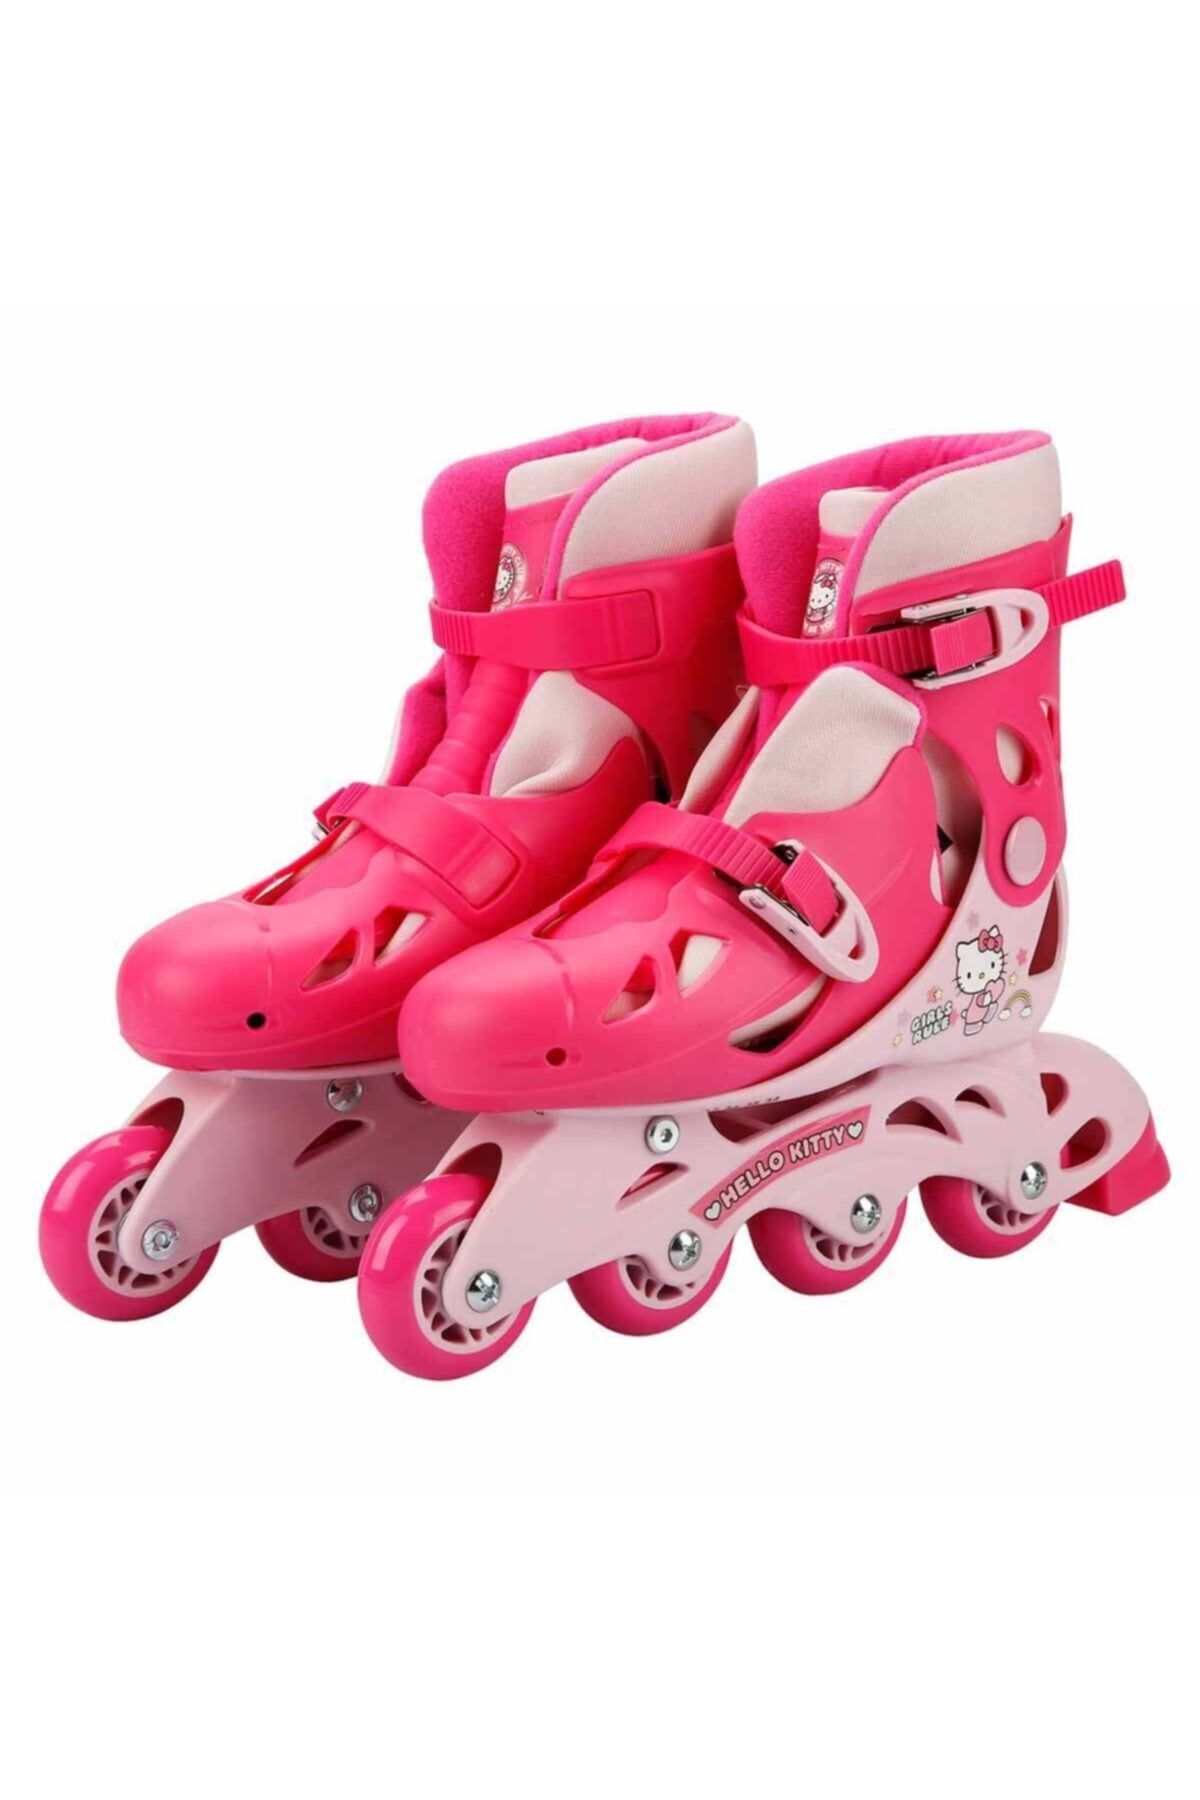 Rising Sports Hello Kitty 4 Tekerlekli Ayarlanabilir Kız Çocuk Pateni (34-37)